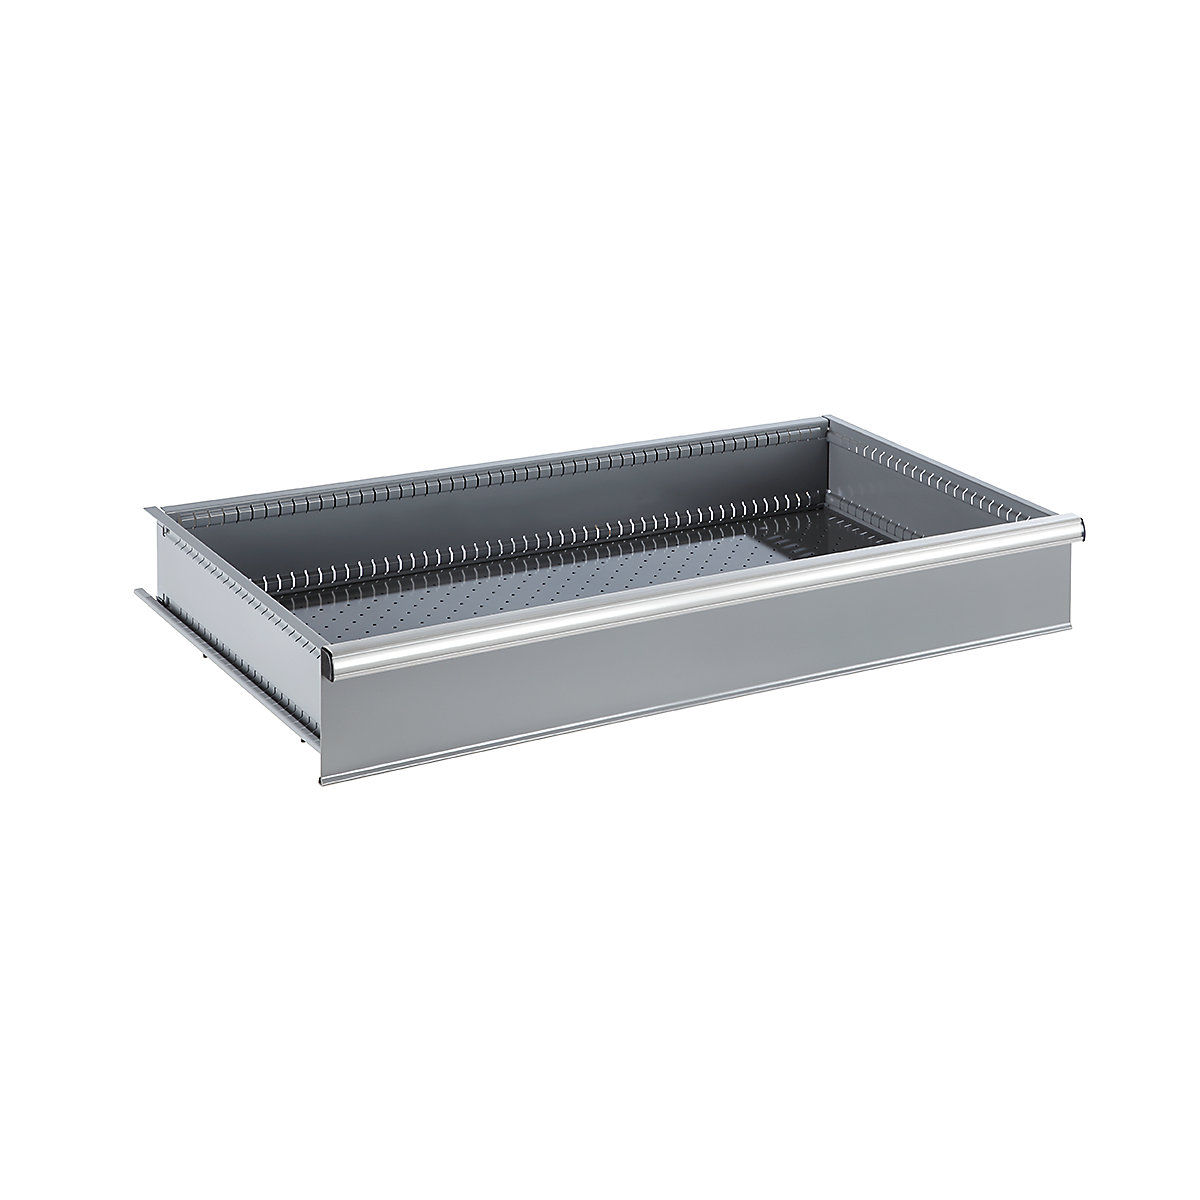 Single drawer – LISTA, WxD 918 x 459 mm, grey, height 82.5 mm-1